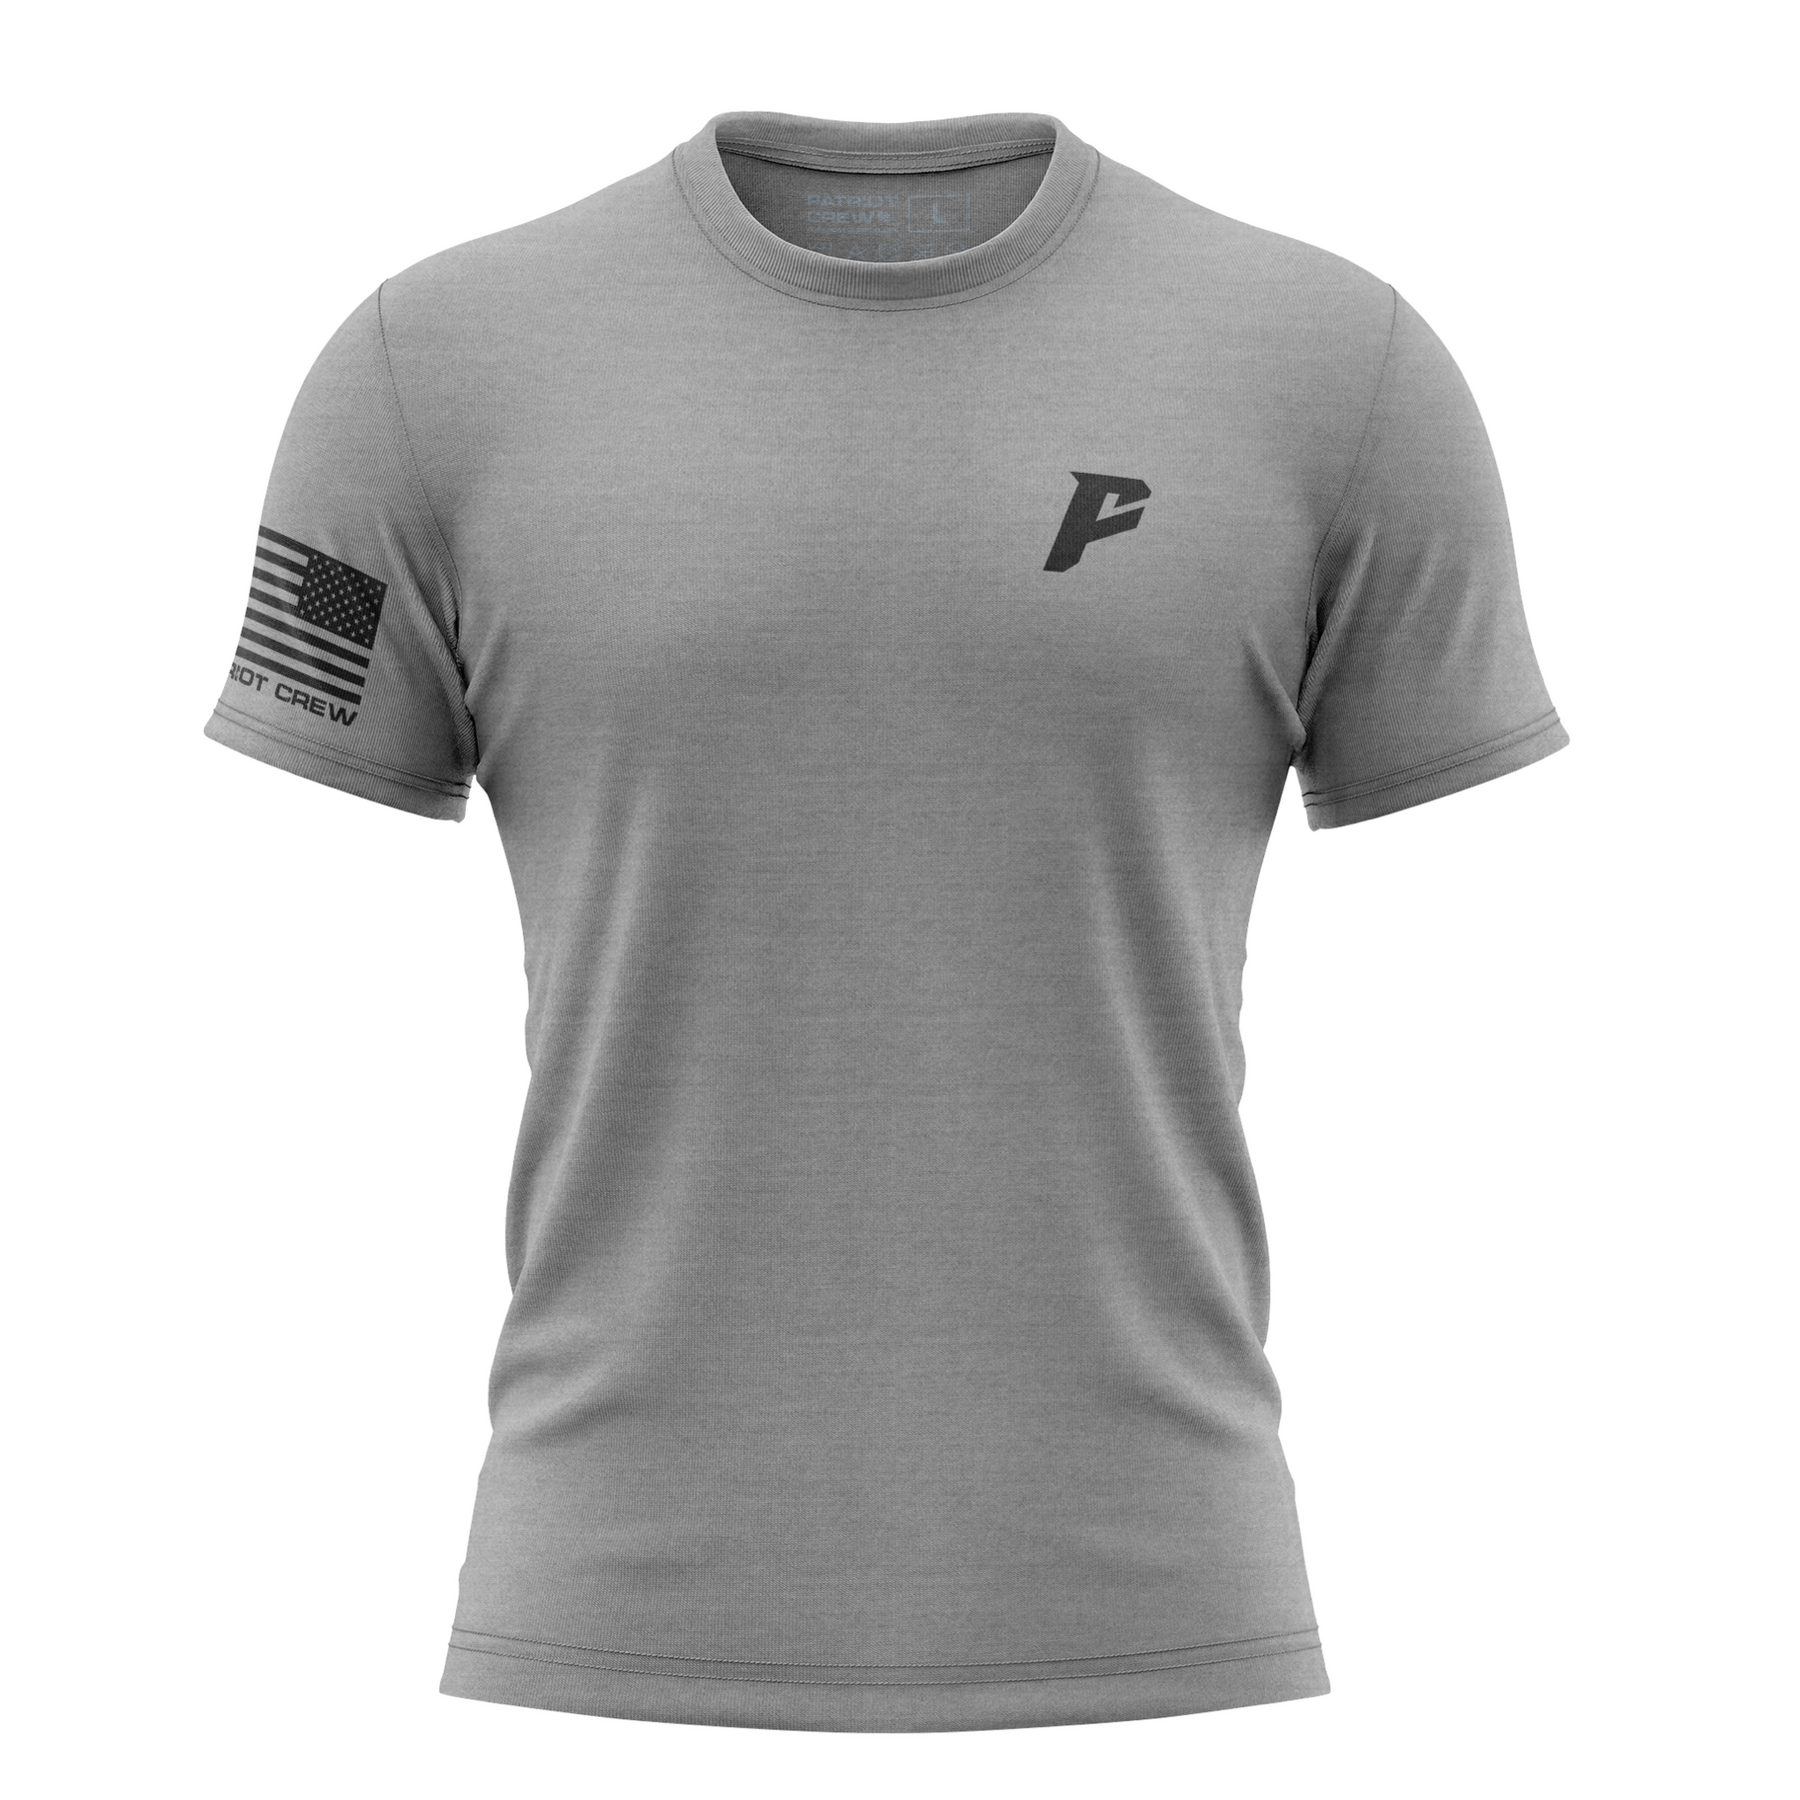 Patriot Crew Crest Flag T-Shirt